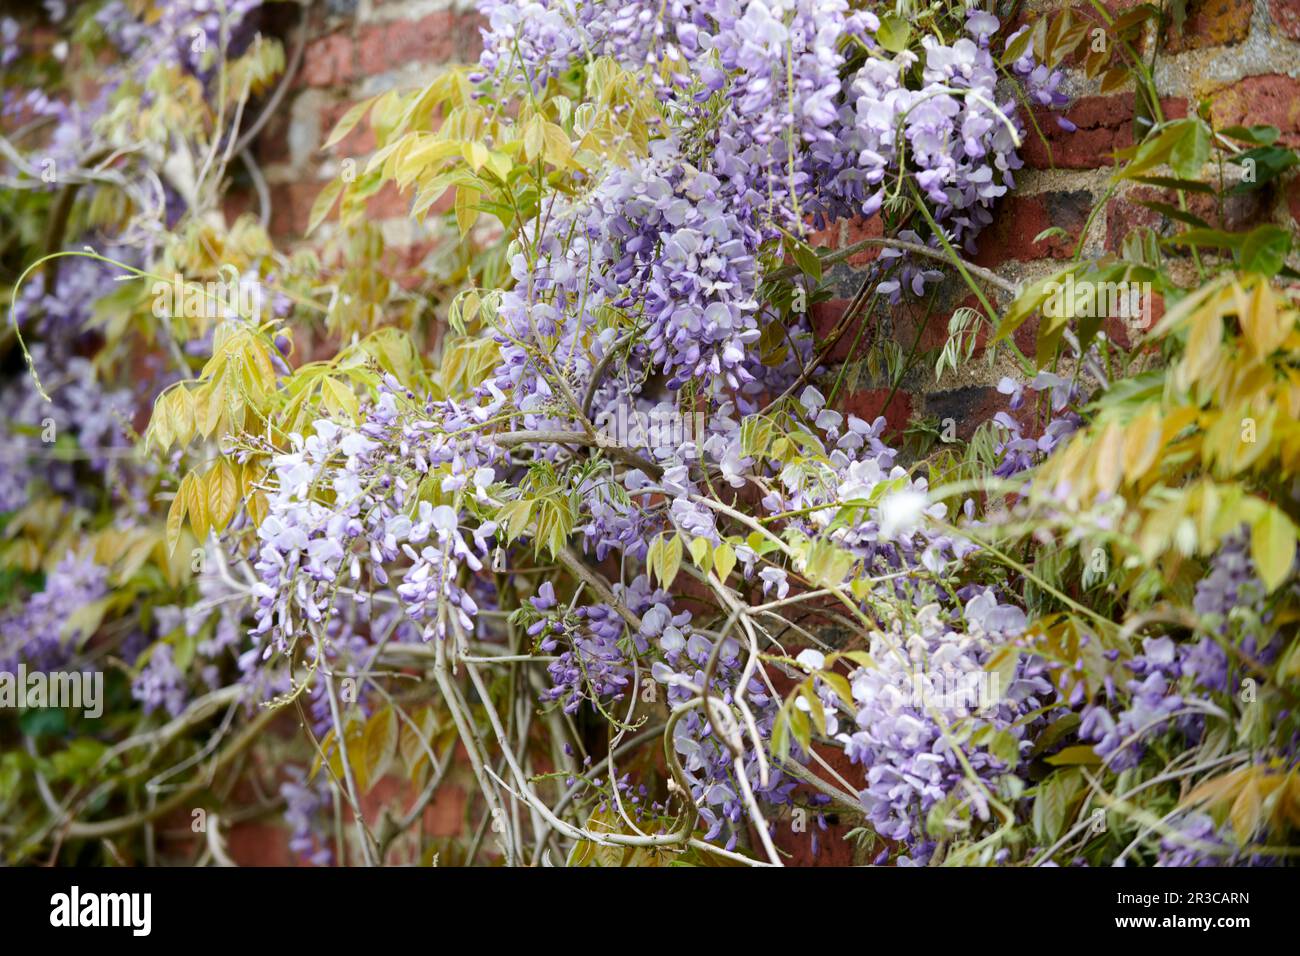 Wisteria sinensis vine growing in an Elizabethan Garden in the summer sunshine. Stock Photo